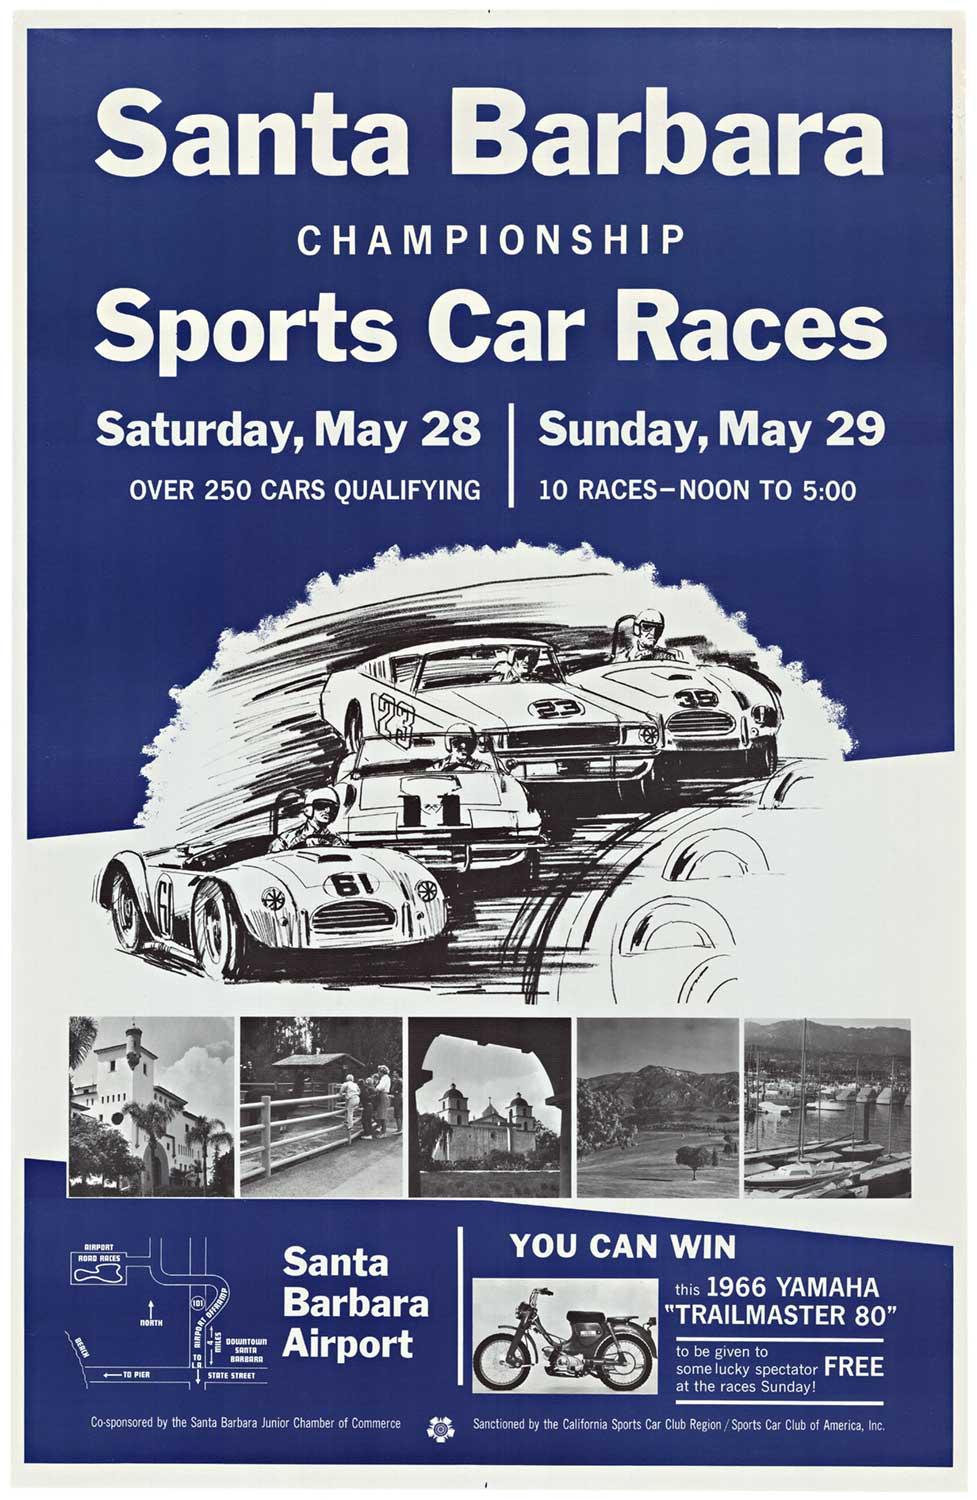 Original 1966 Santa Barbara Sports Car Races Championship vintage poster